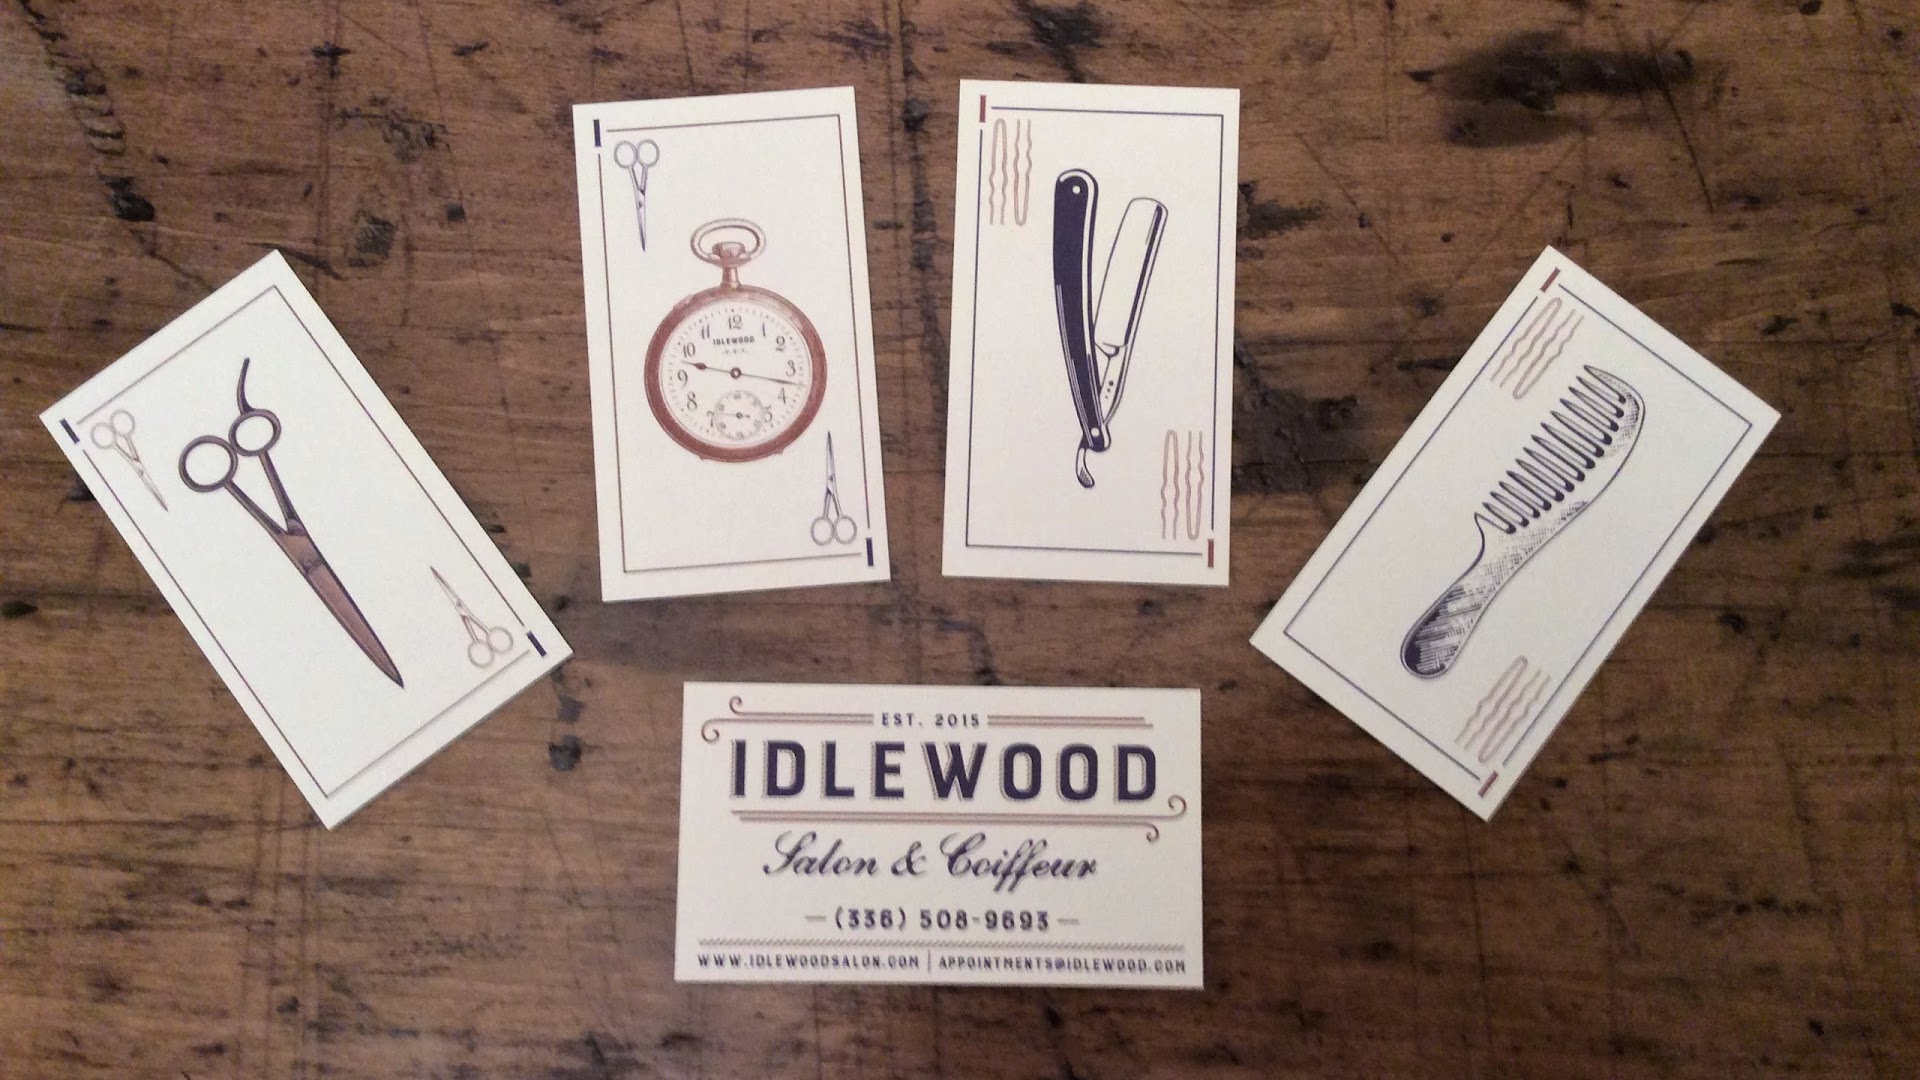 Idlewood Salon